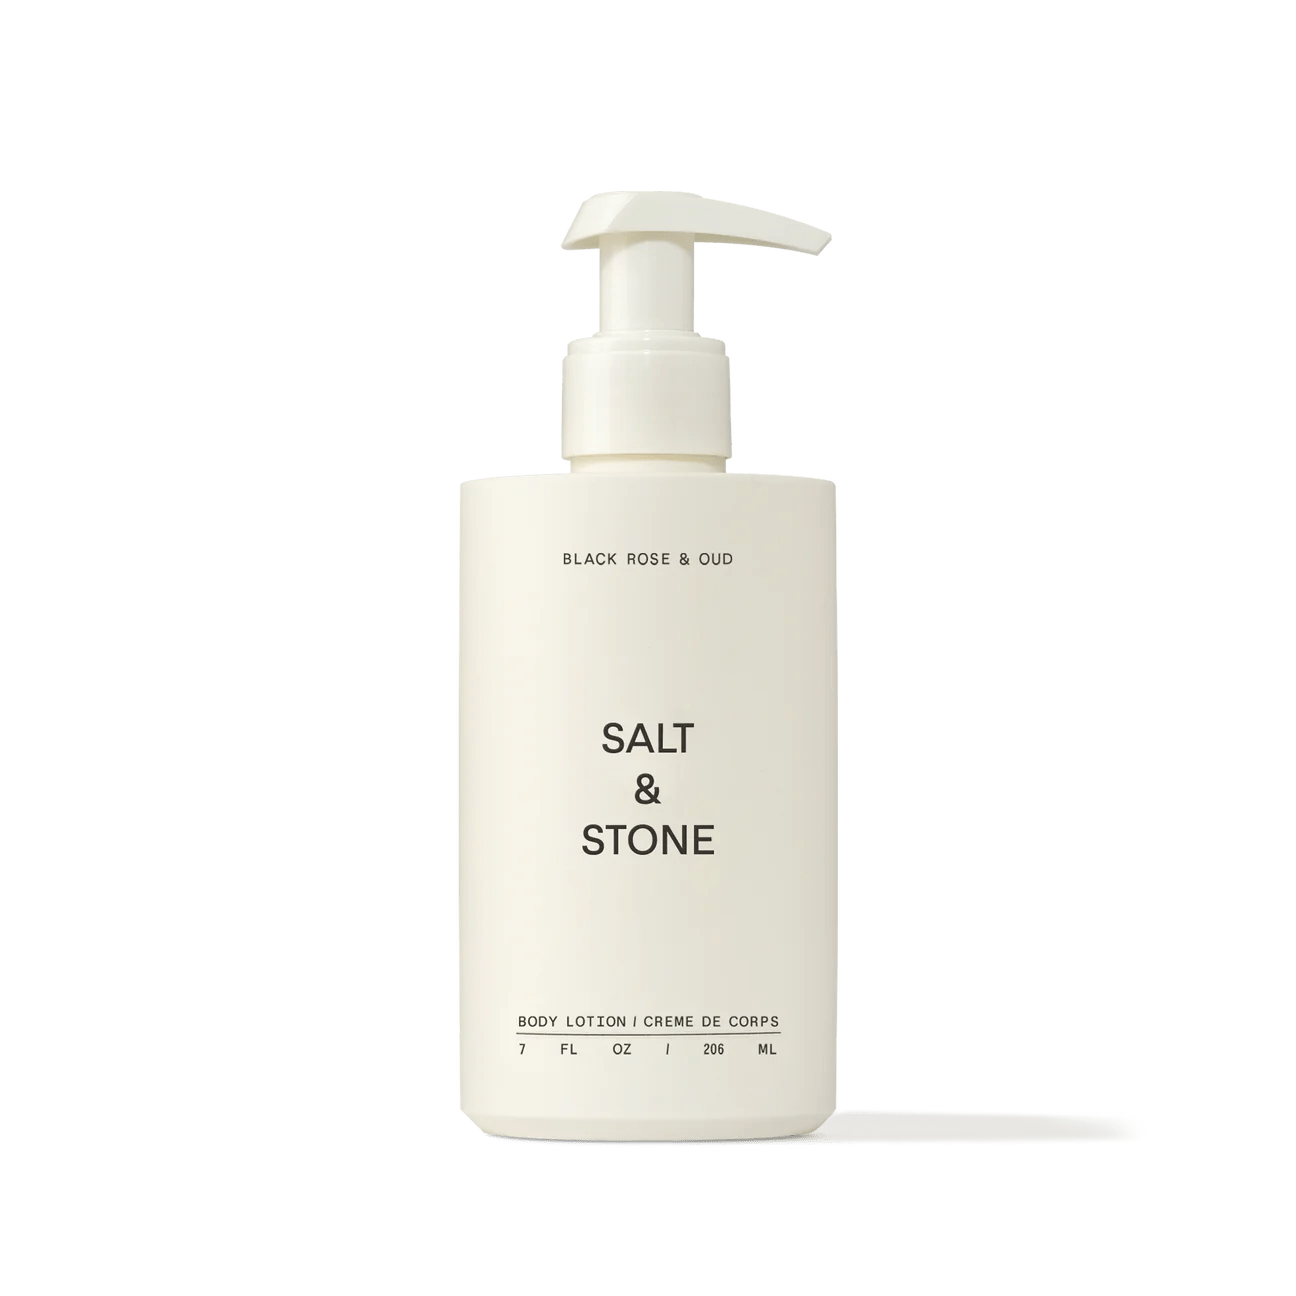 Salt & Stone - Salt & Stone Body Lotion - ORESTA clean beauty simplified